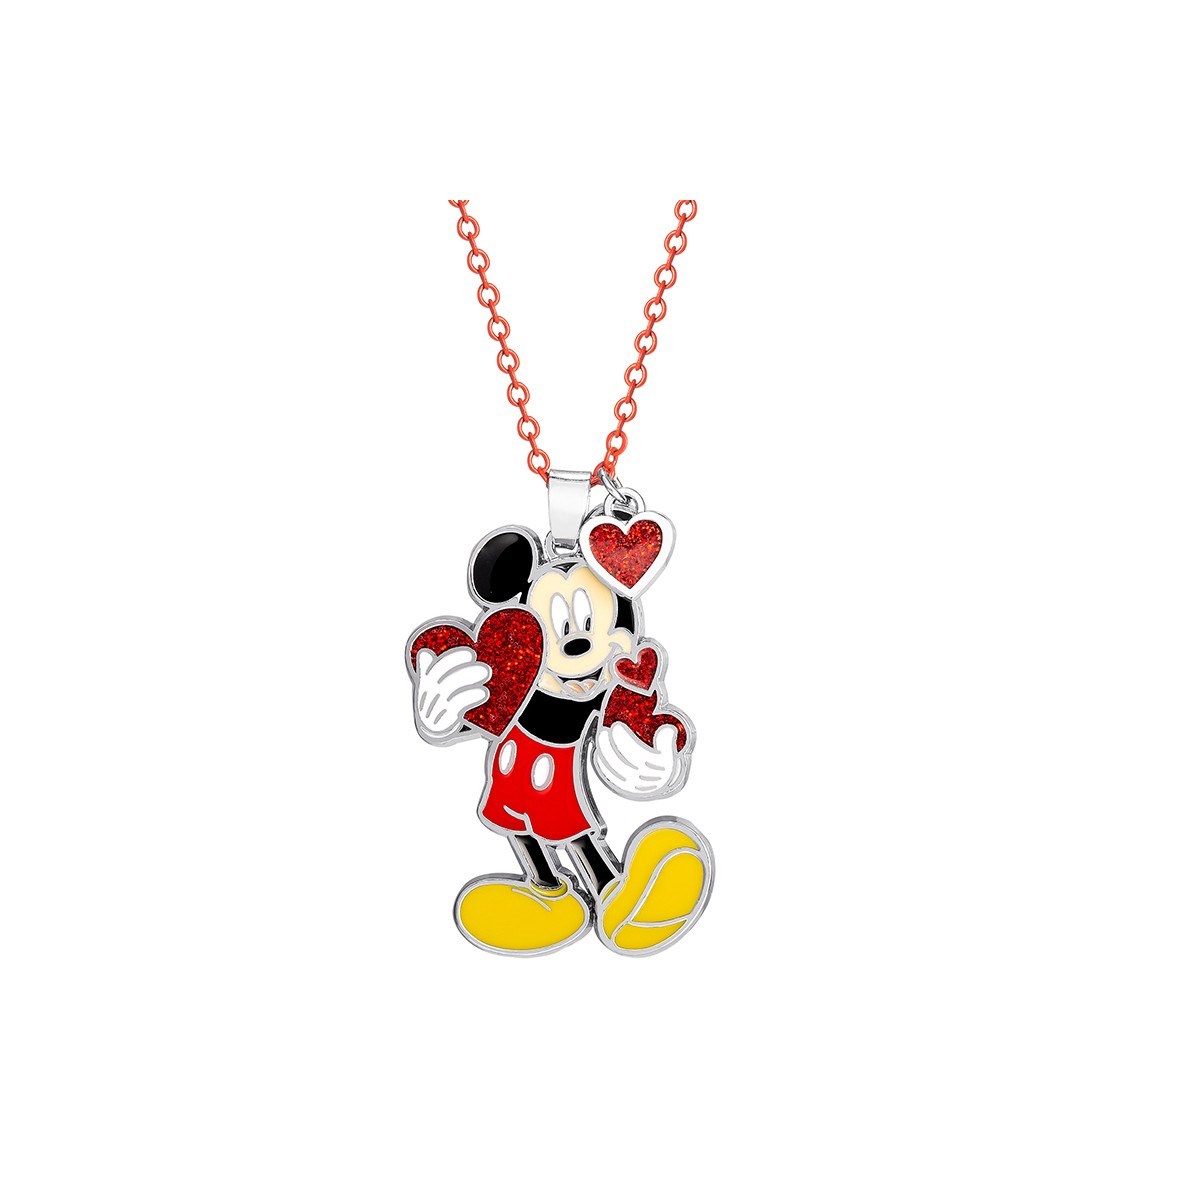 Collier Disney - Mickey